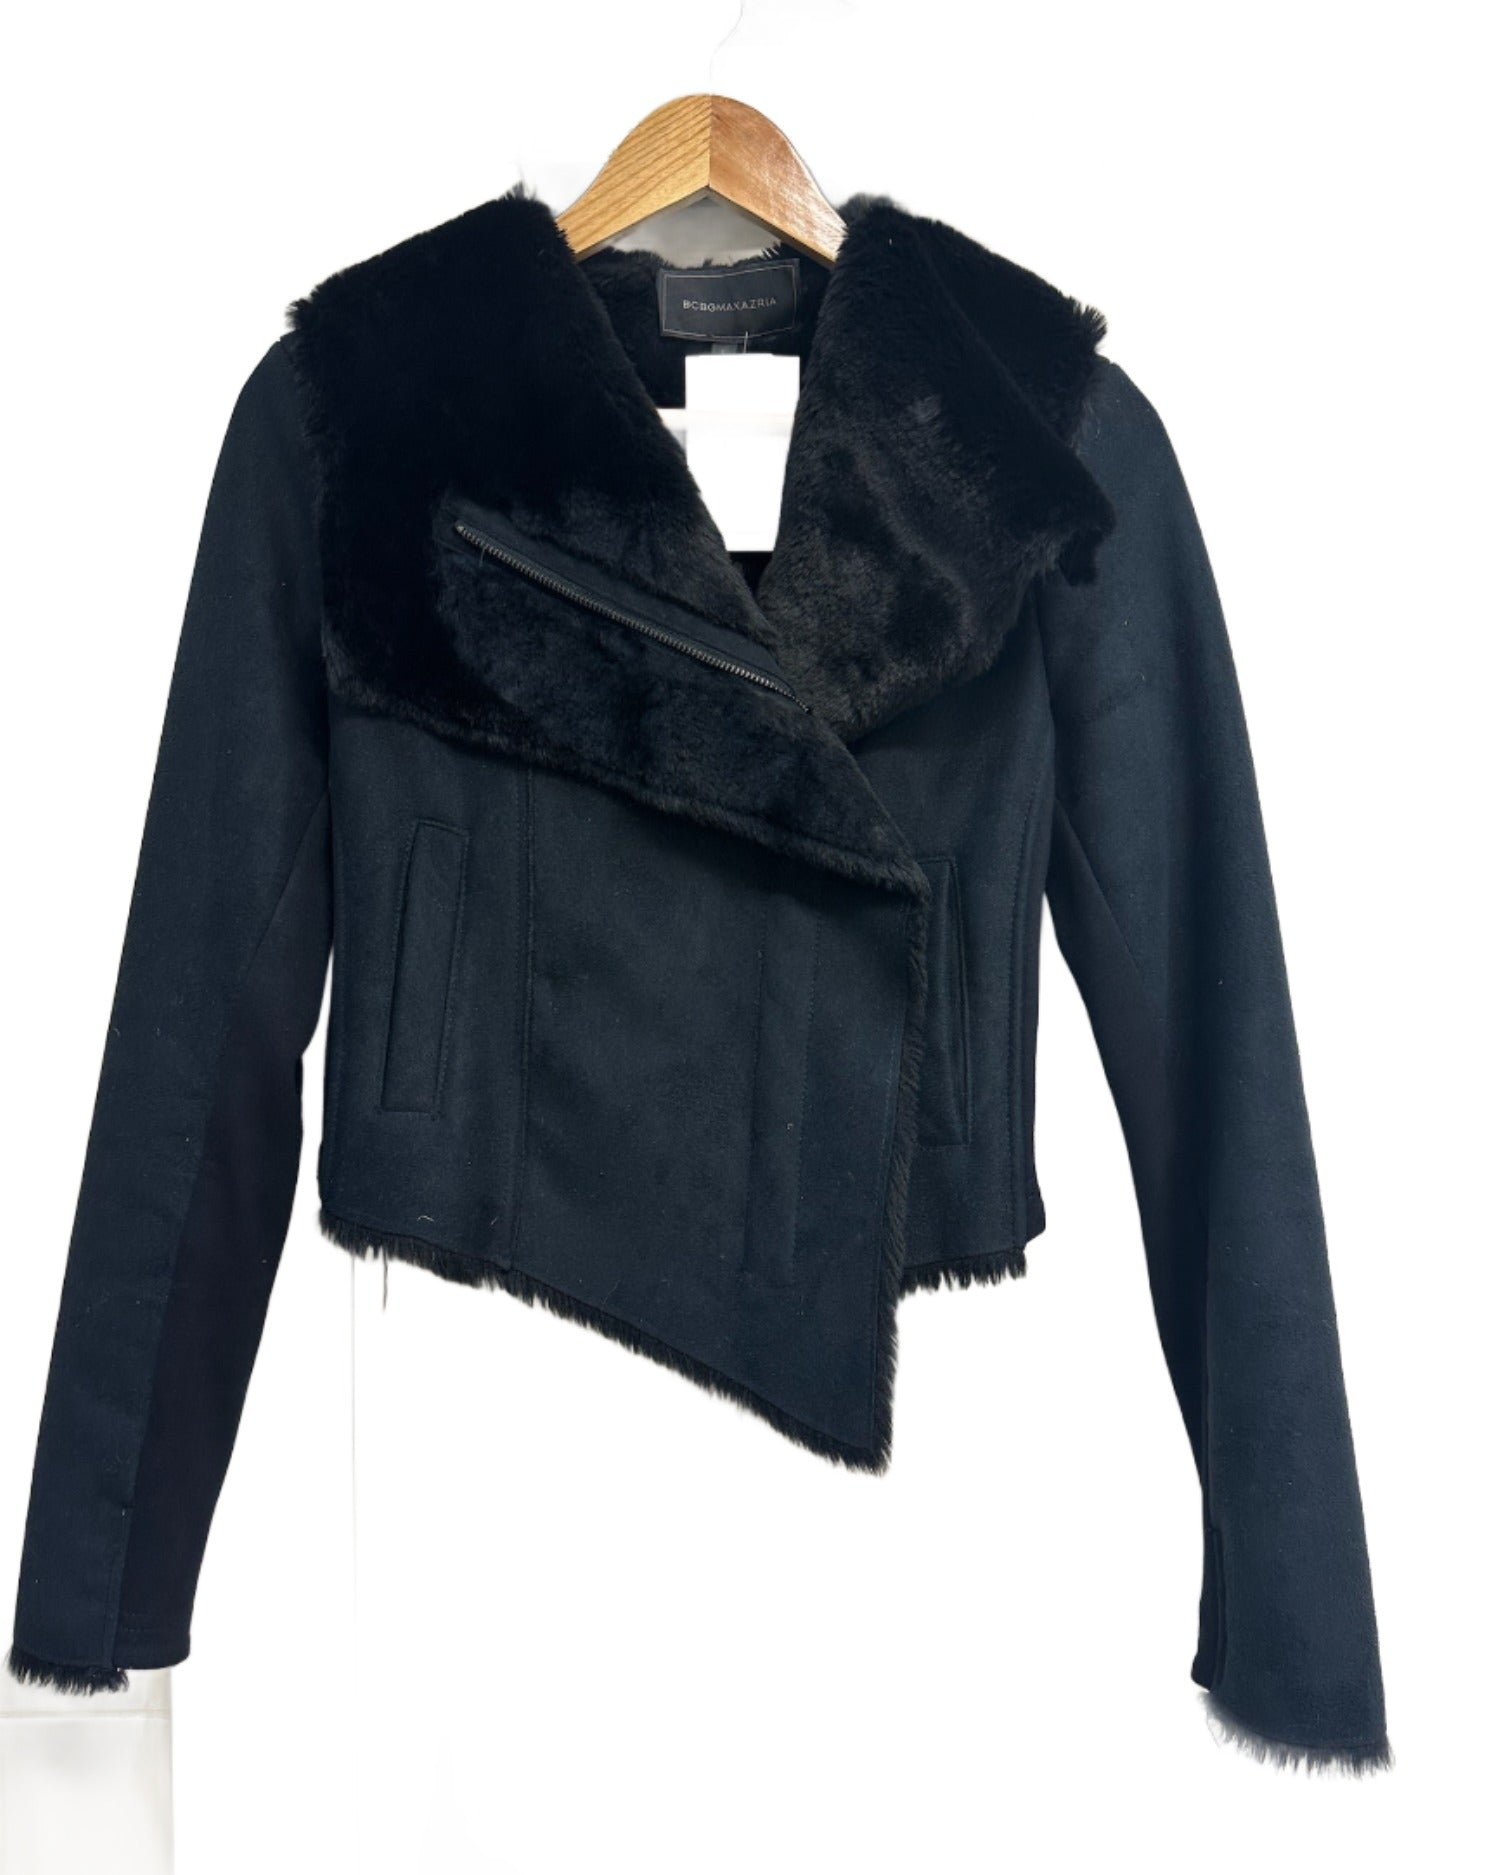 BCBGMAXAZRIA Black Fur Lined Jacket